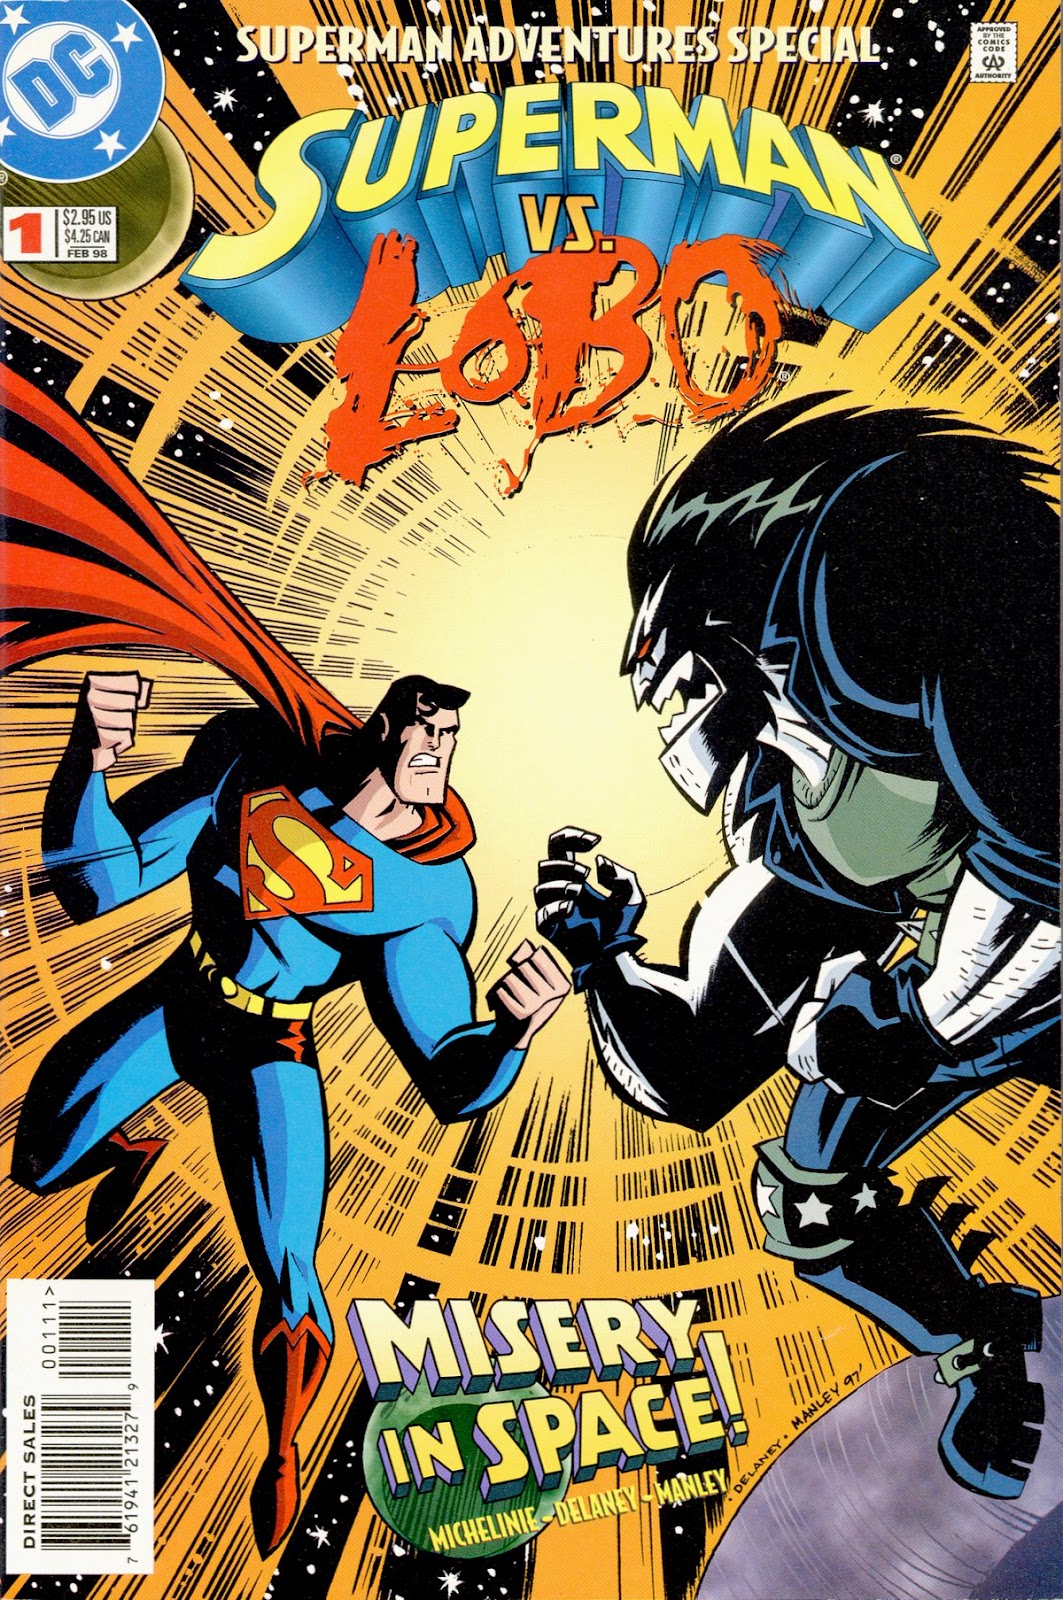 Superman Adventures issue Special - Superman vs Lobo - Page 1